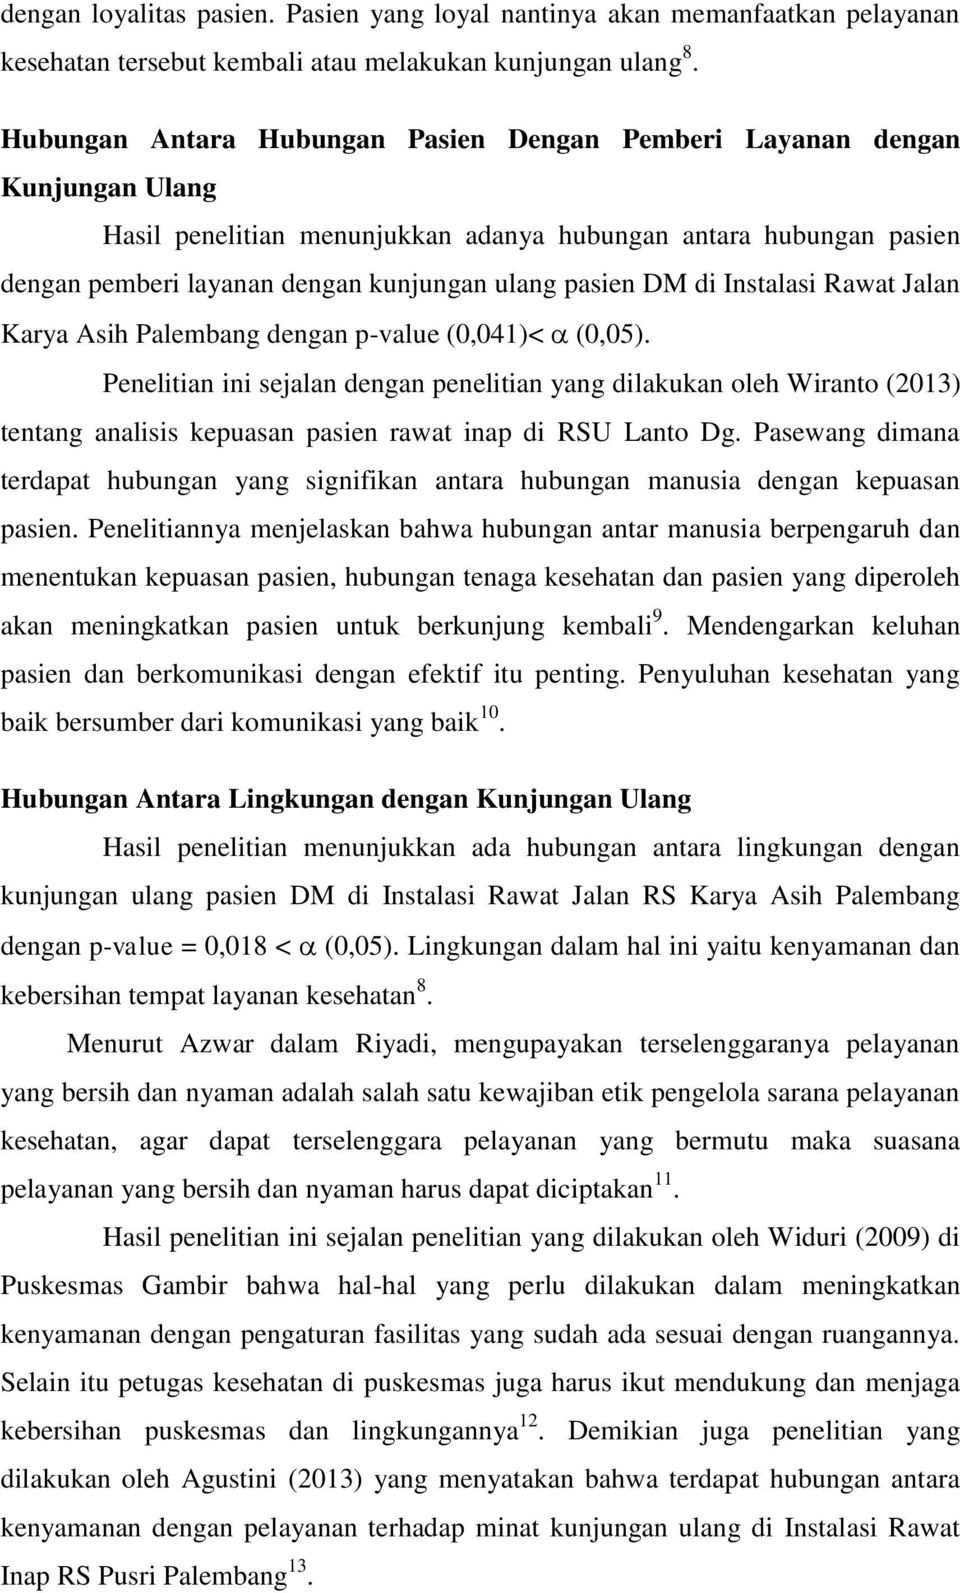 DM di Instalasi Rawat Jalan Karya Asih Palembang dengan p-value (0,041)< (0,05).